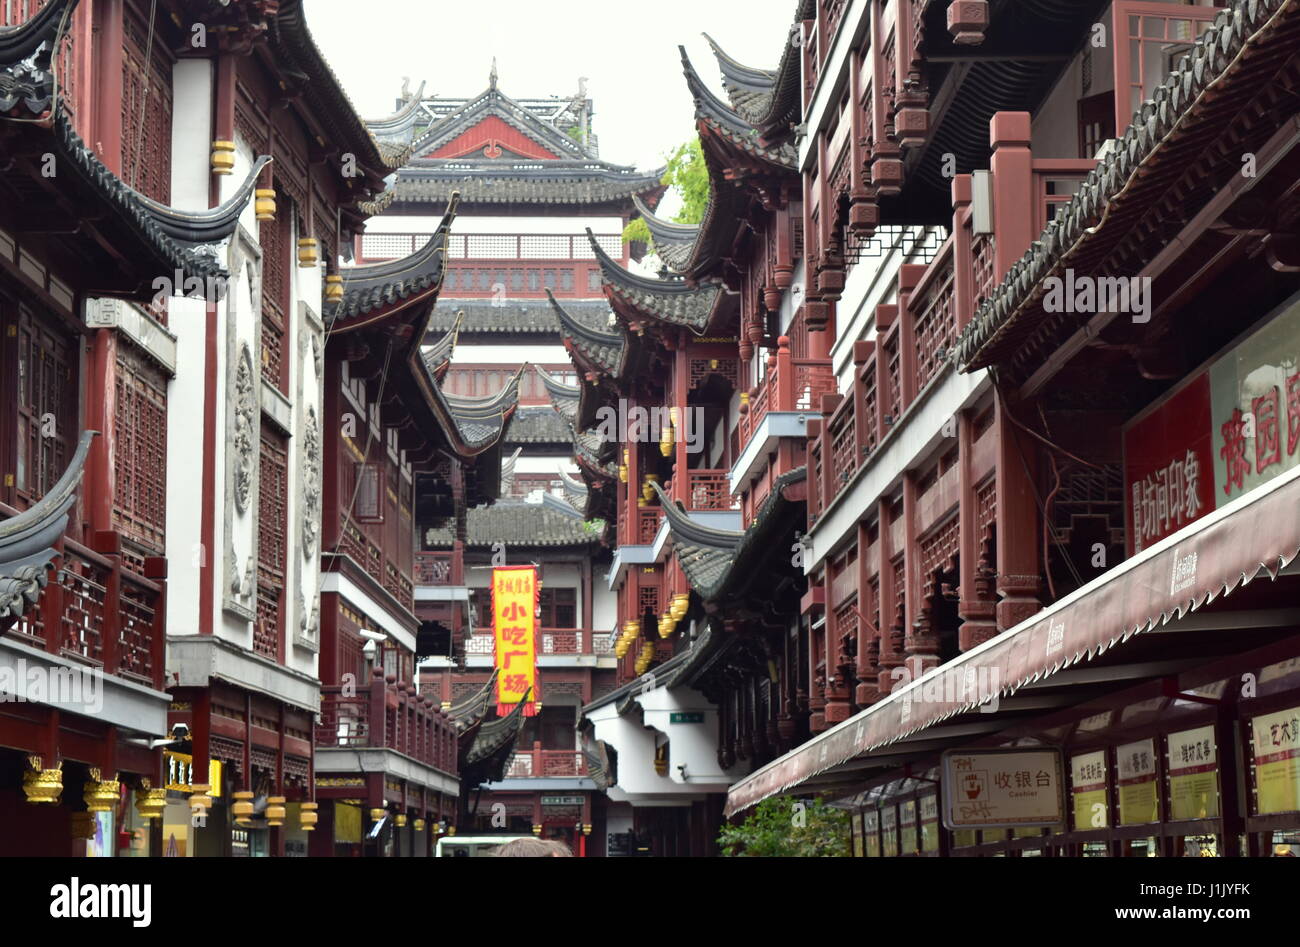 Shanghai traditional Yu garden market alley and wooden facades - China Stock Photo